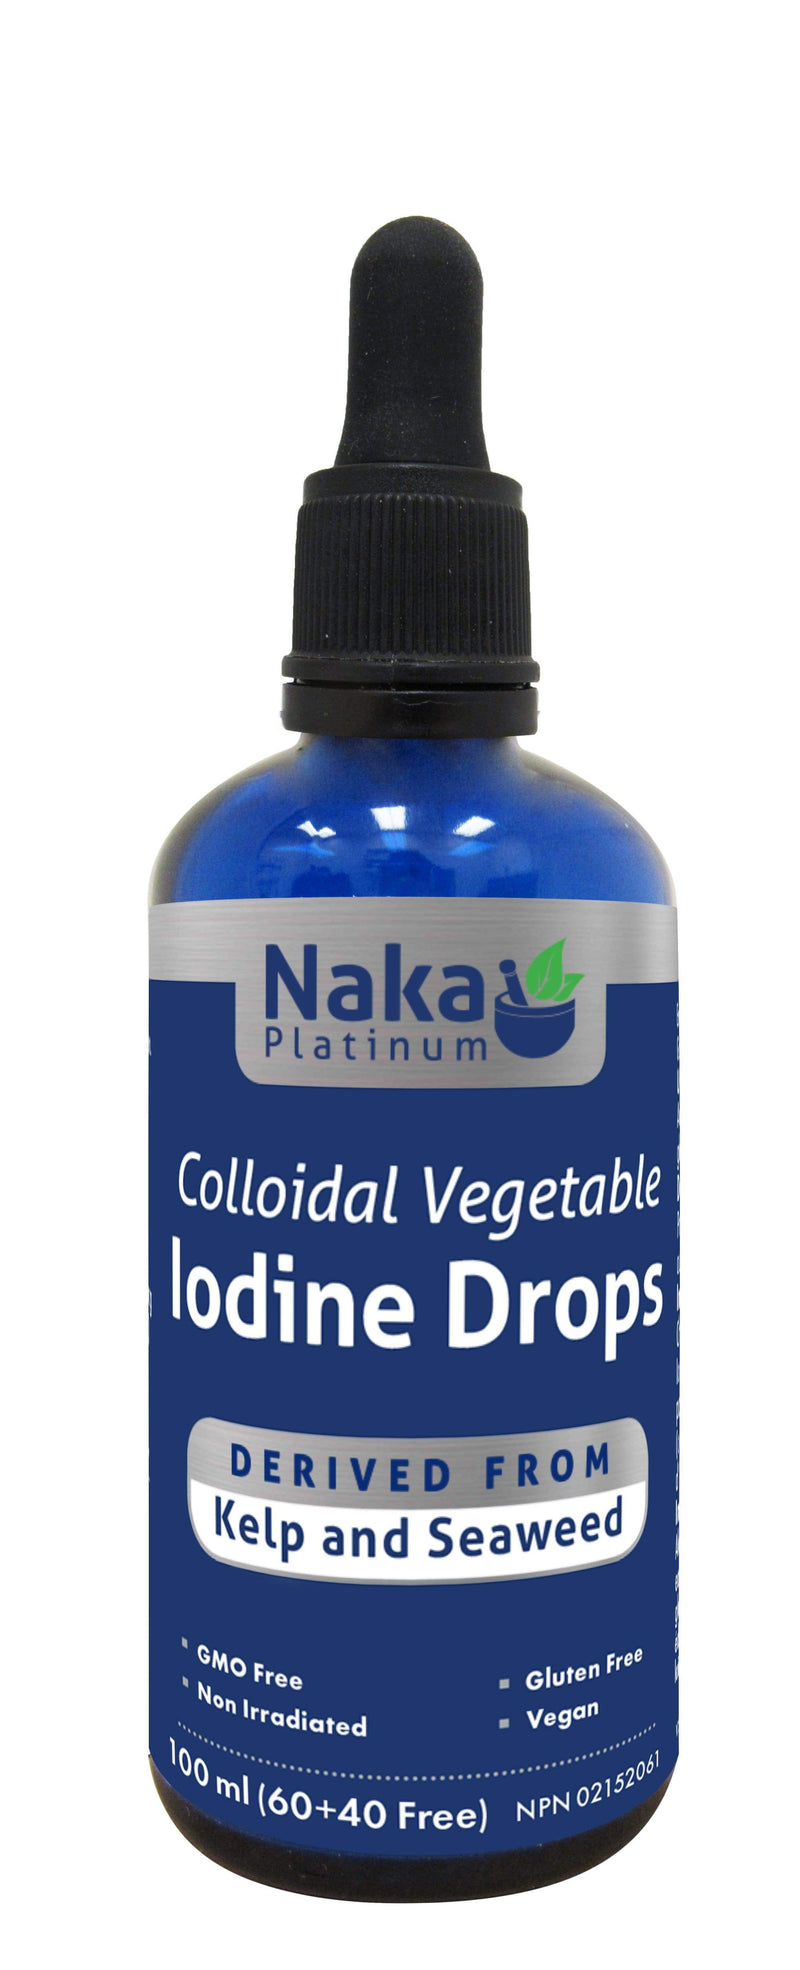 Naka Platinum Colloidal Vegetable Iodine Drops, 100 mL